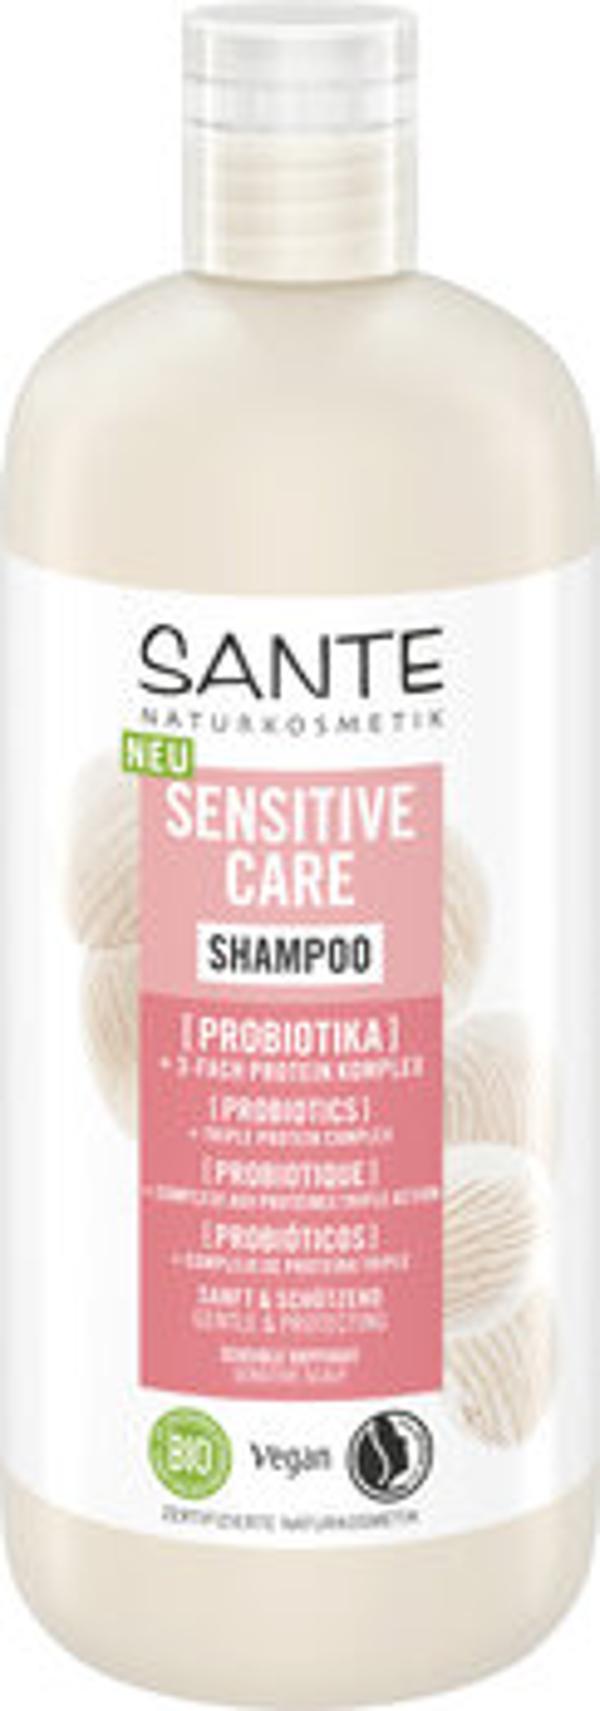 Produktfoto zu Sensitive Care Shampoo Probiotika 500ml